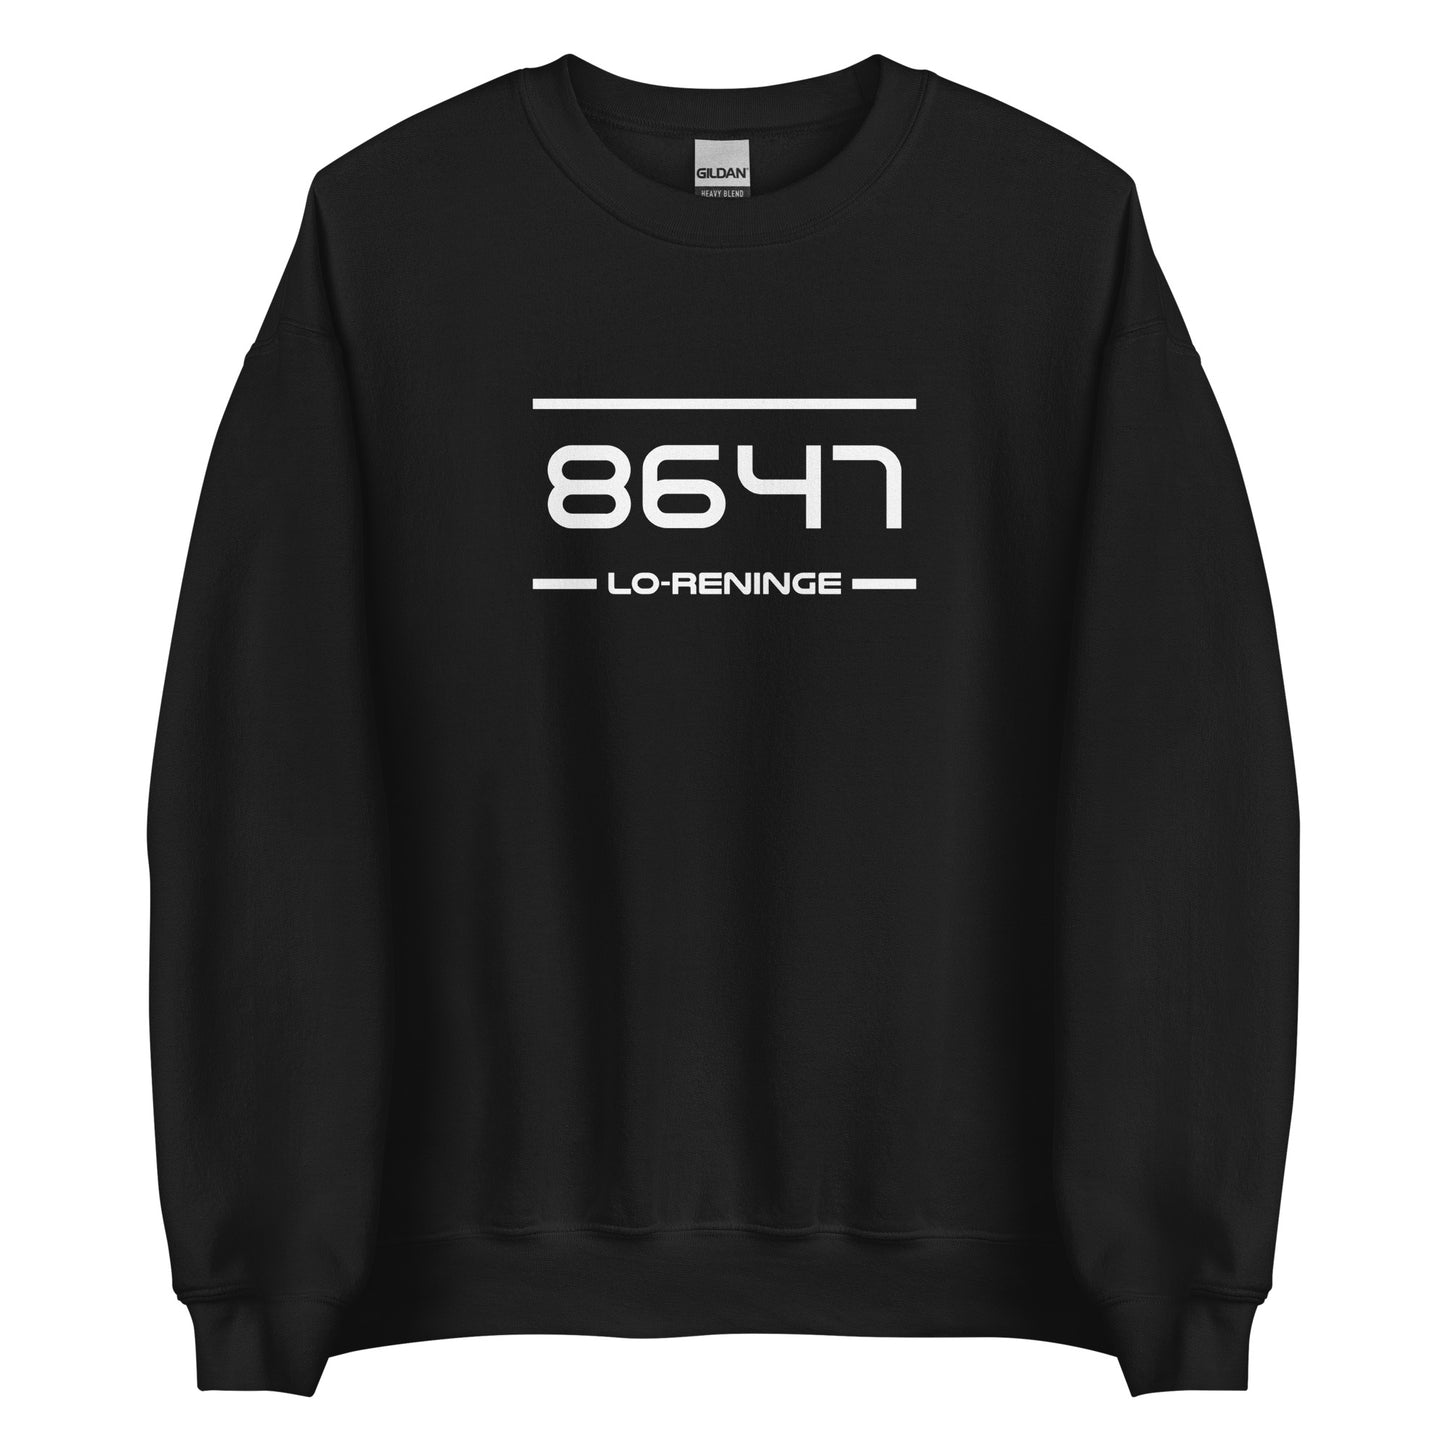 Sweater - 8647 - Lo-Reninge (M/V)